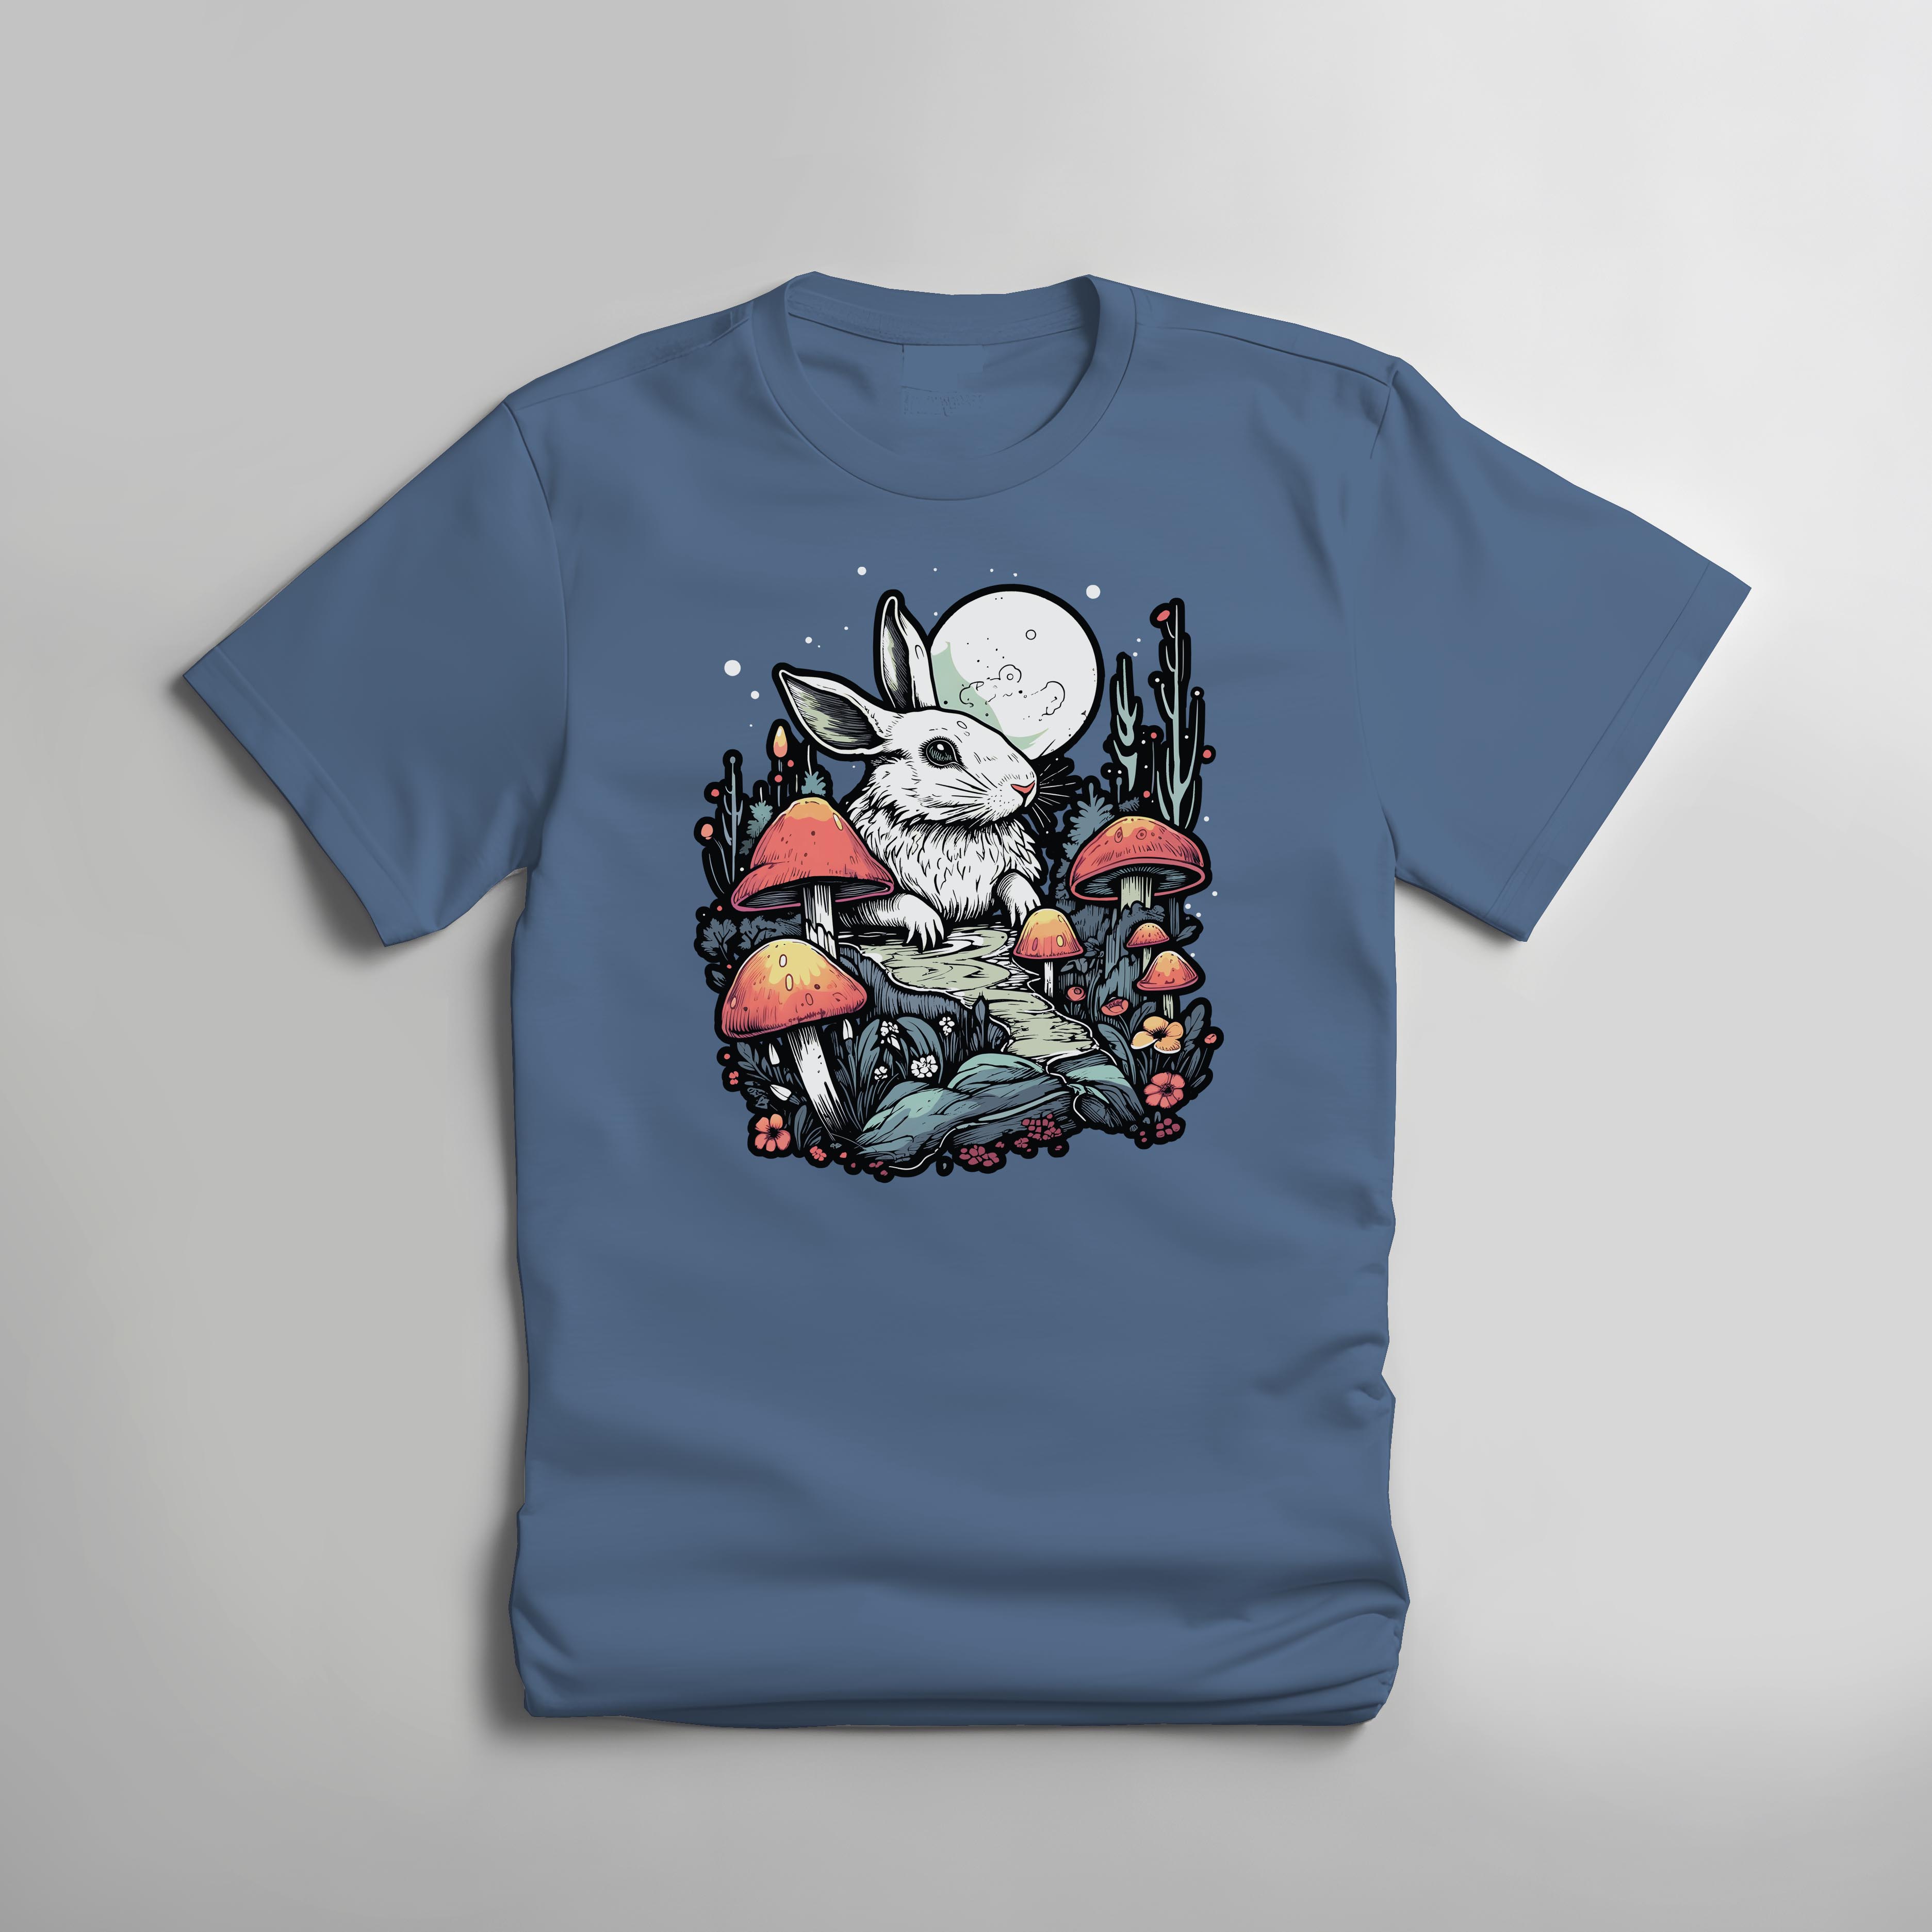 Mushroomcore Rabbit T-shirt - Indigo Blue